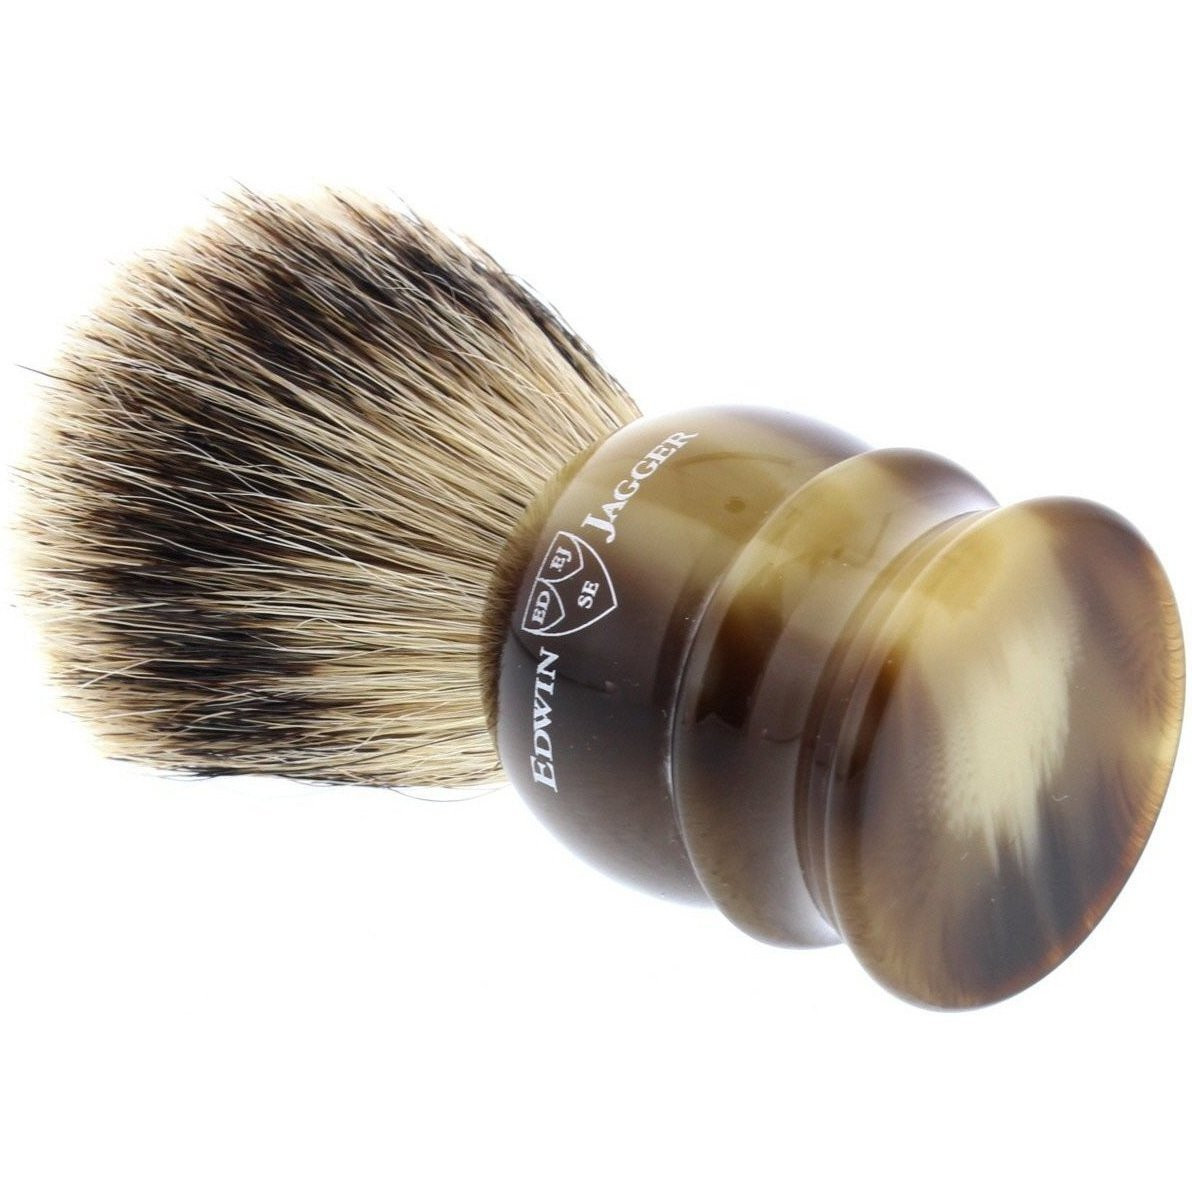 Product image 4 for Edwin Jagger Silver Tip Badger Shaving Brush, Medium, Imitation Horn